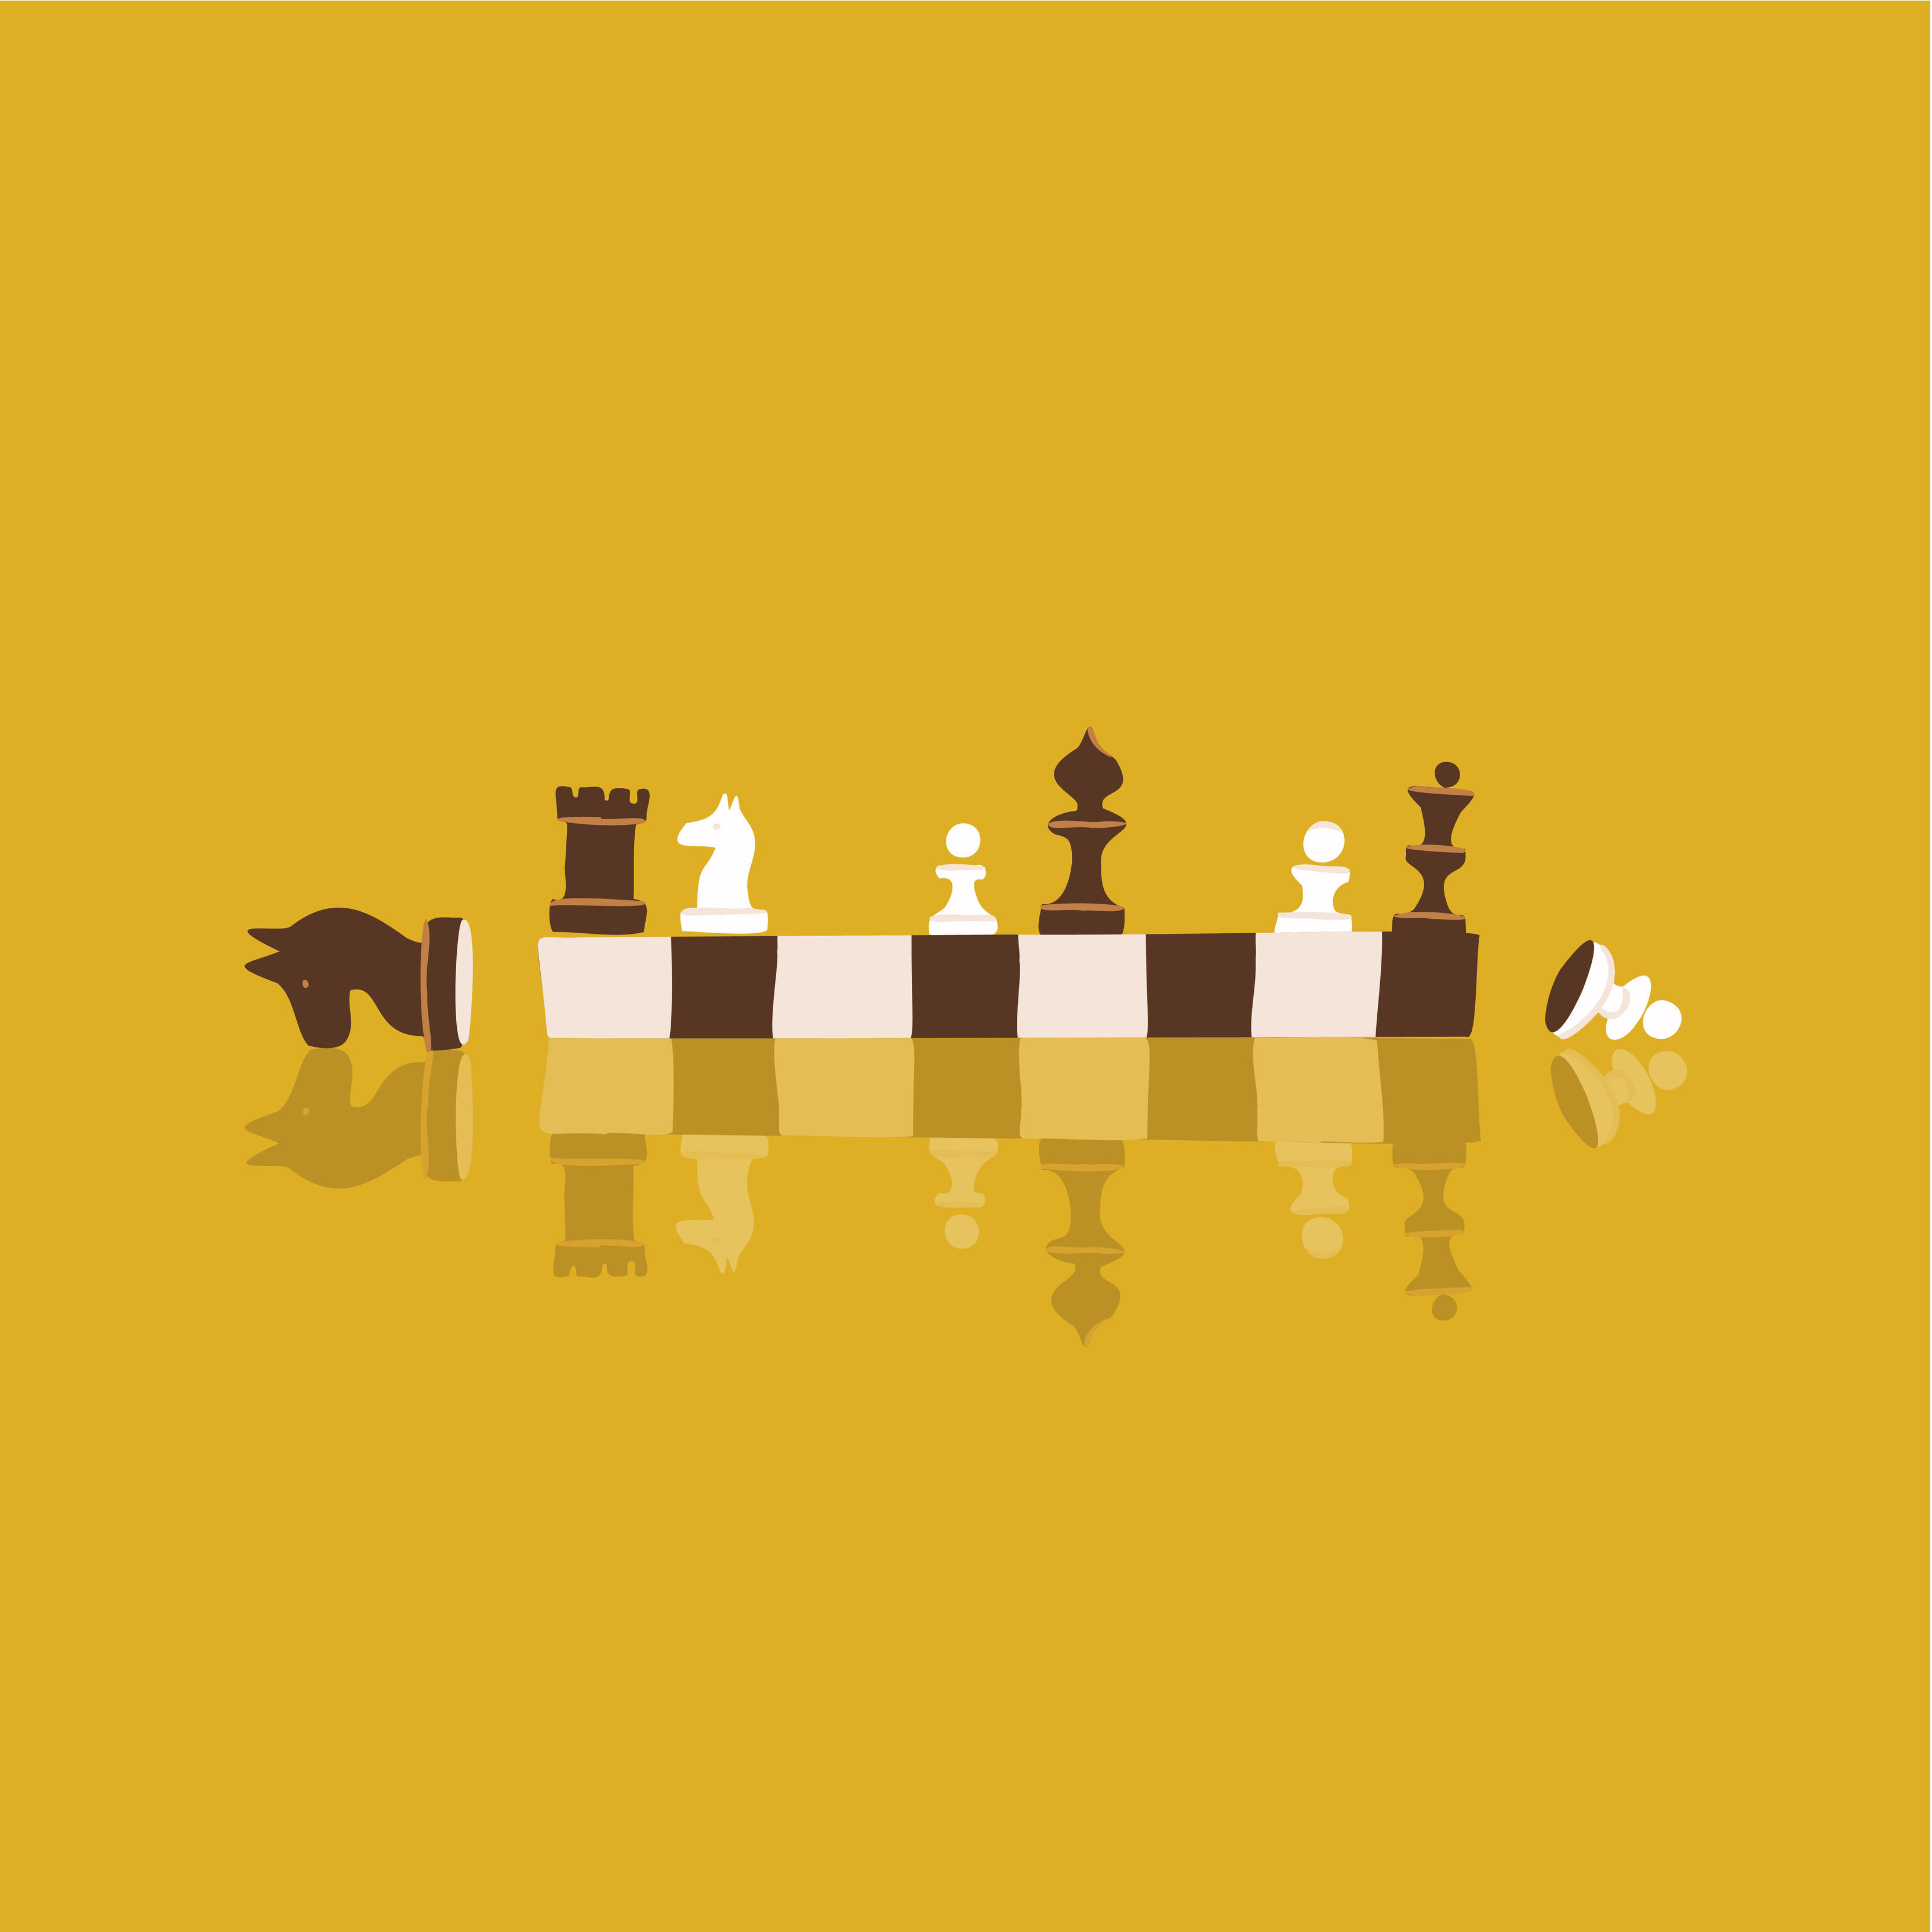 Do Chaturanga ao xadrez!_Banner site – Equipe de design – Espaco